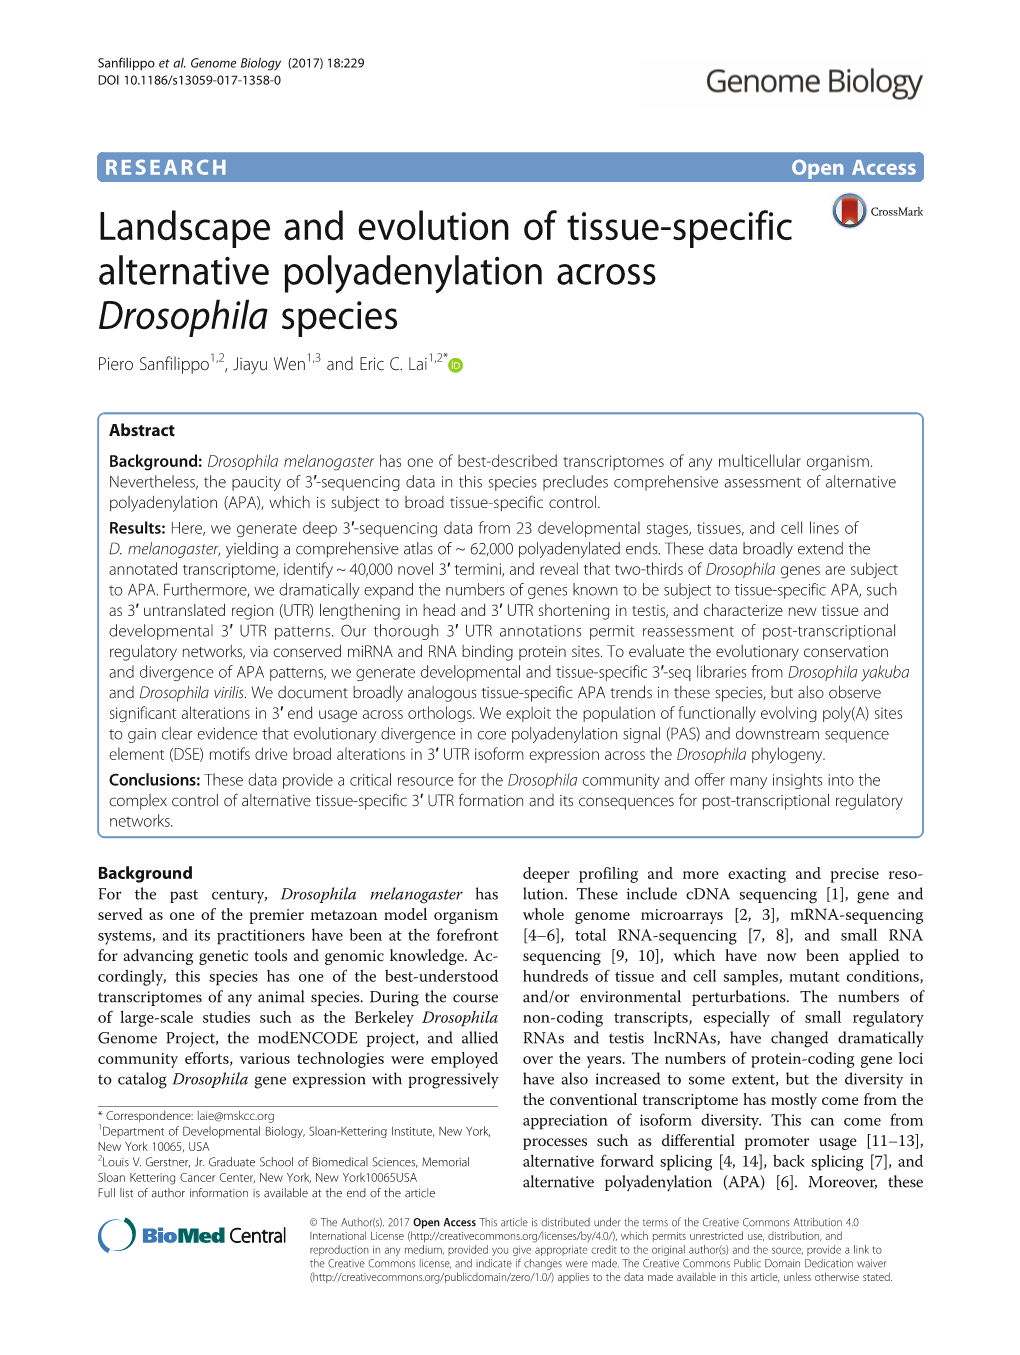 Landscape and Evolution of Tissue-Specific Alternative Polyadenylation Across Drosophila Species Piero Sanfilippo1,2, Jiayu Wen1,3 and Eric C